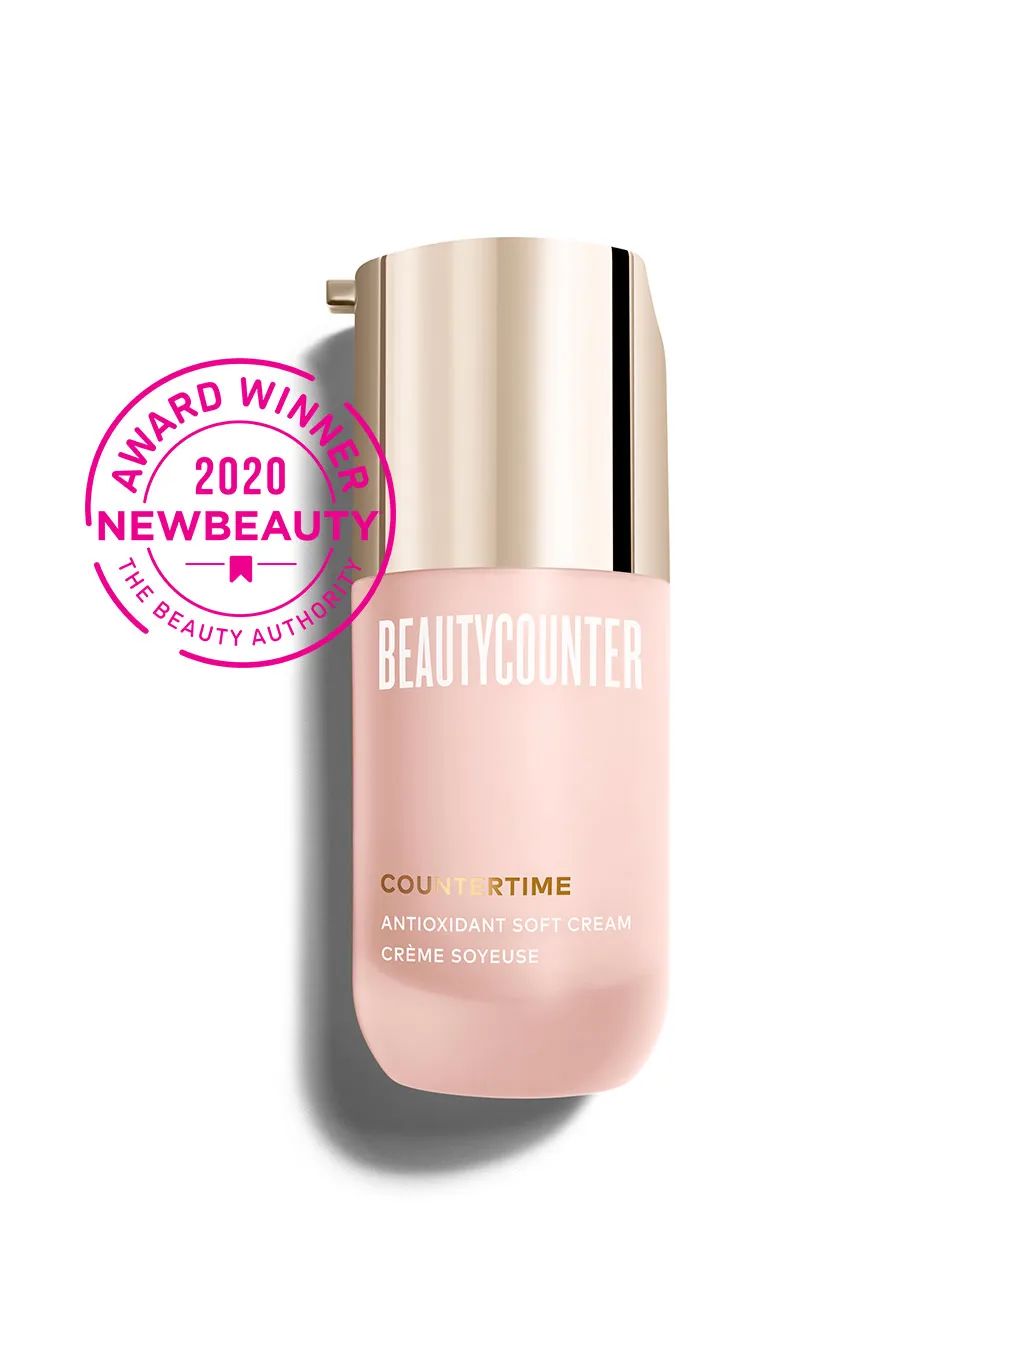 Countertime Antioxidant Soft Cream - Beautycounter - Skin Care, Makeup, Bath and Body and more! | Beautycounter.com